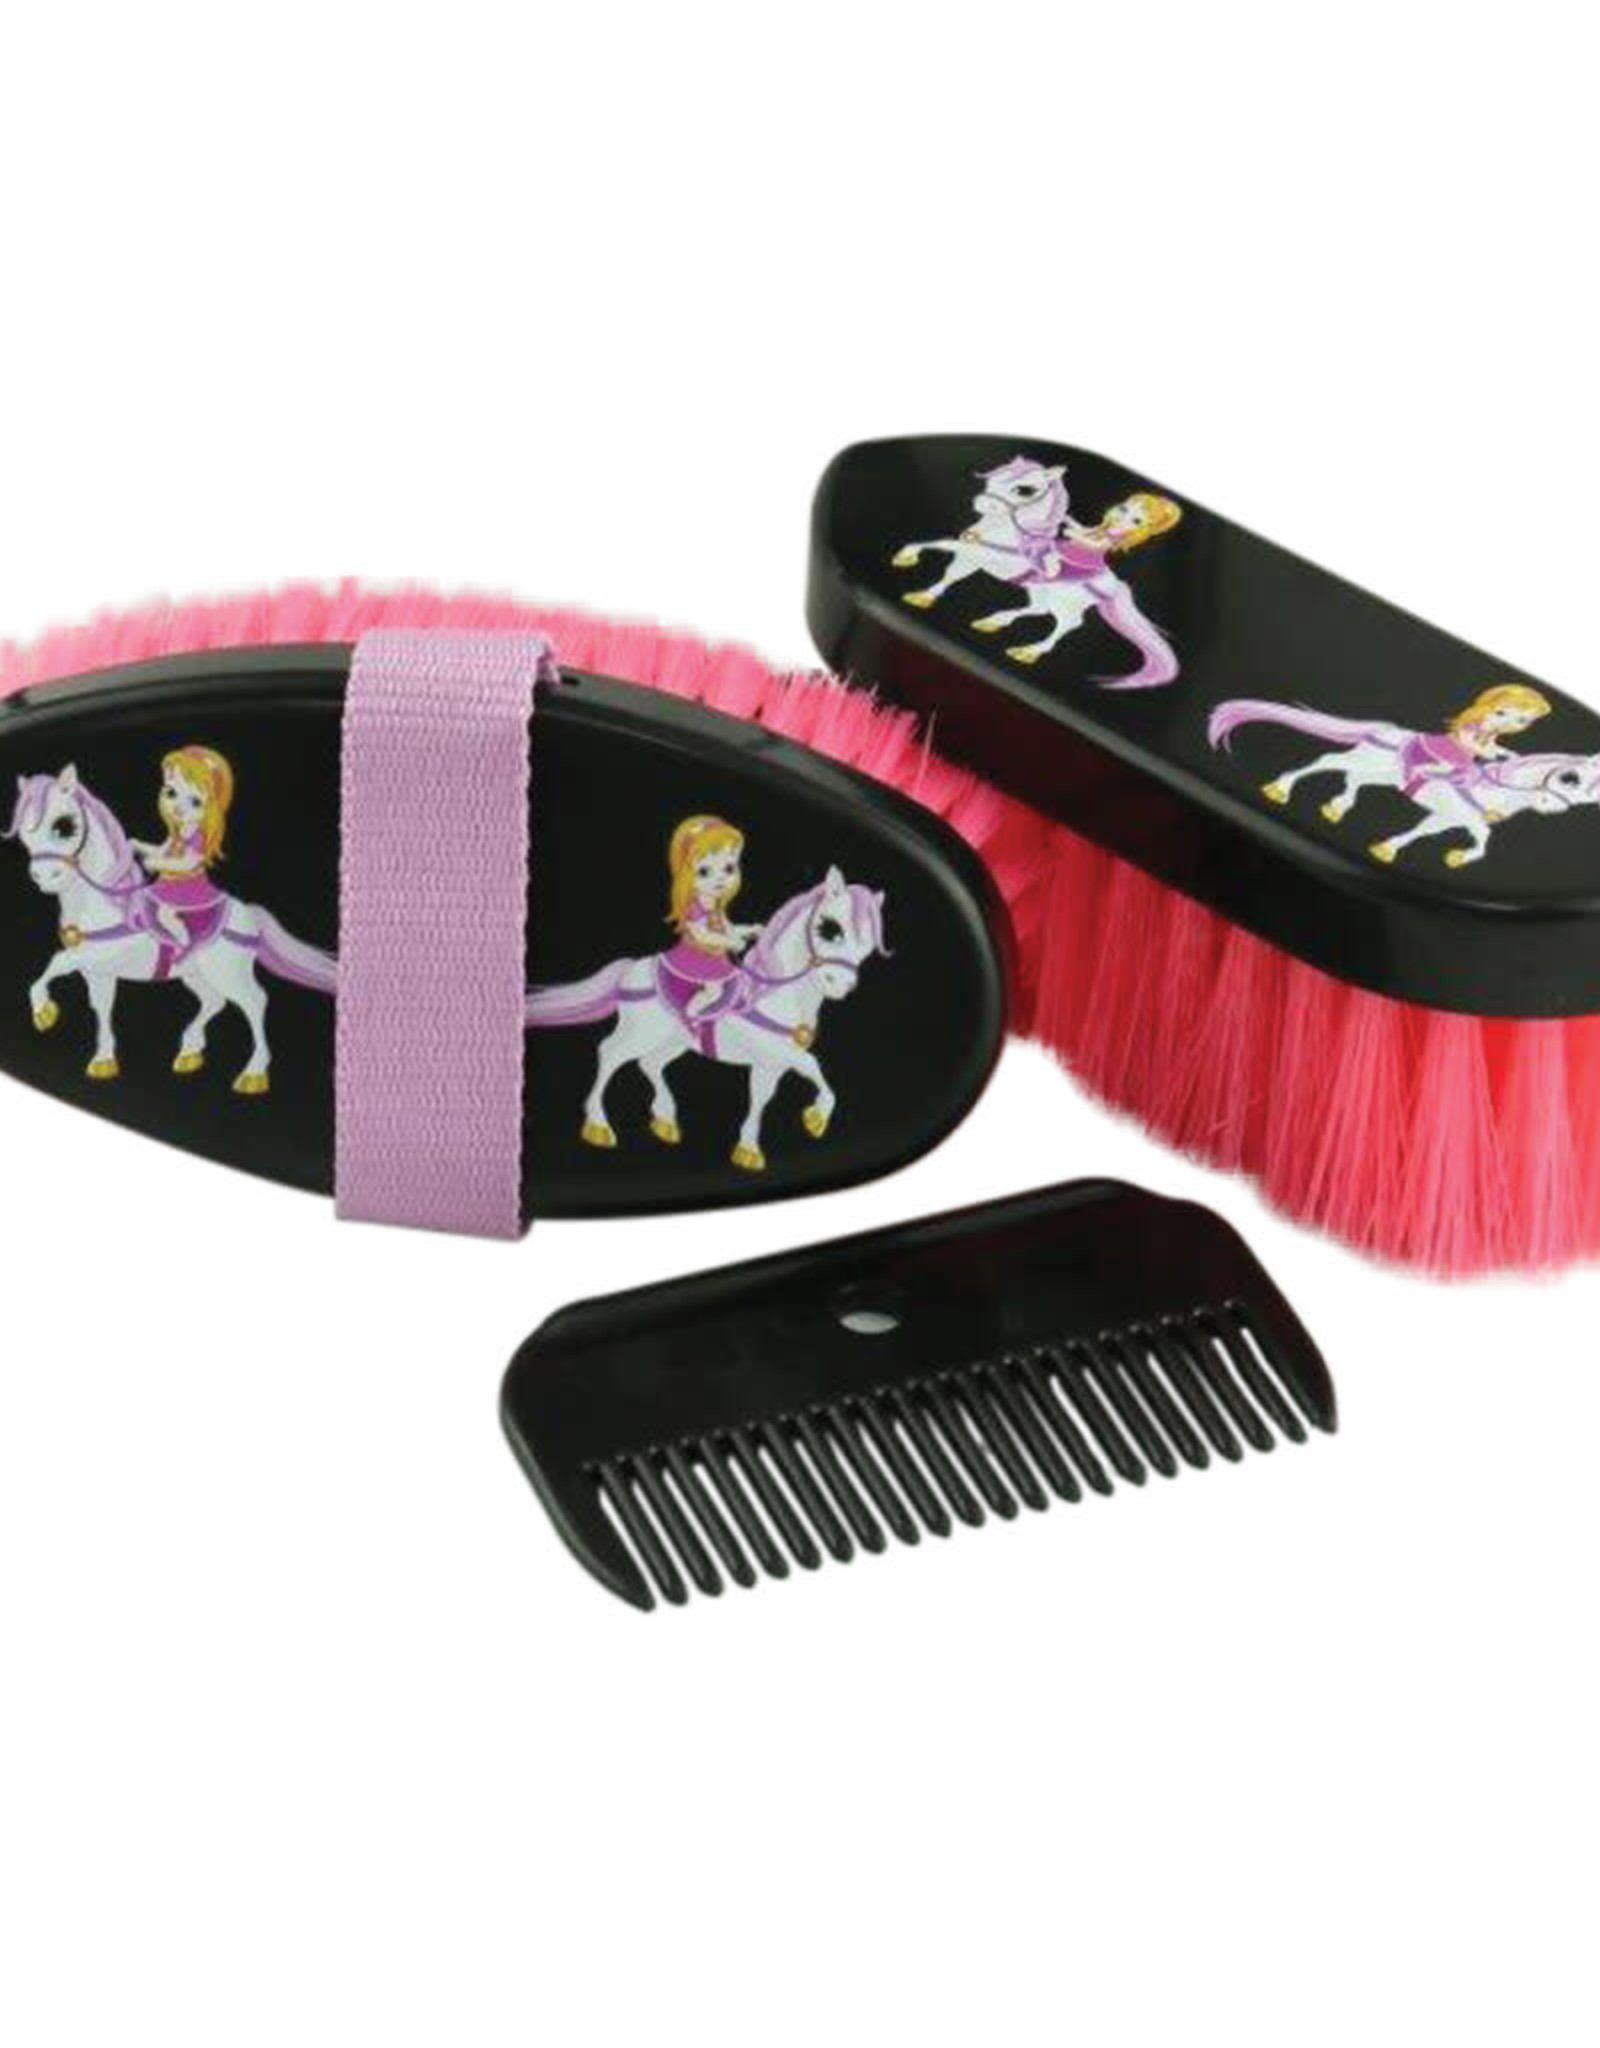 Fairy and Pony - Brush Set